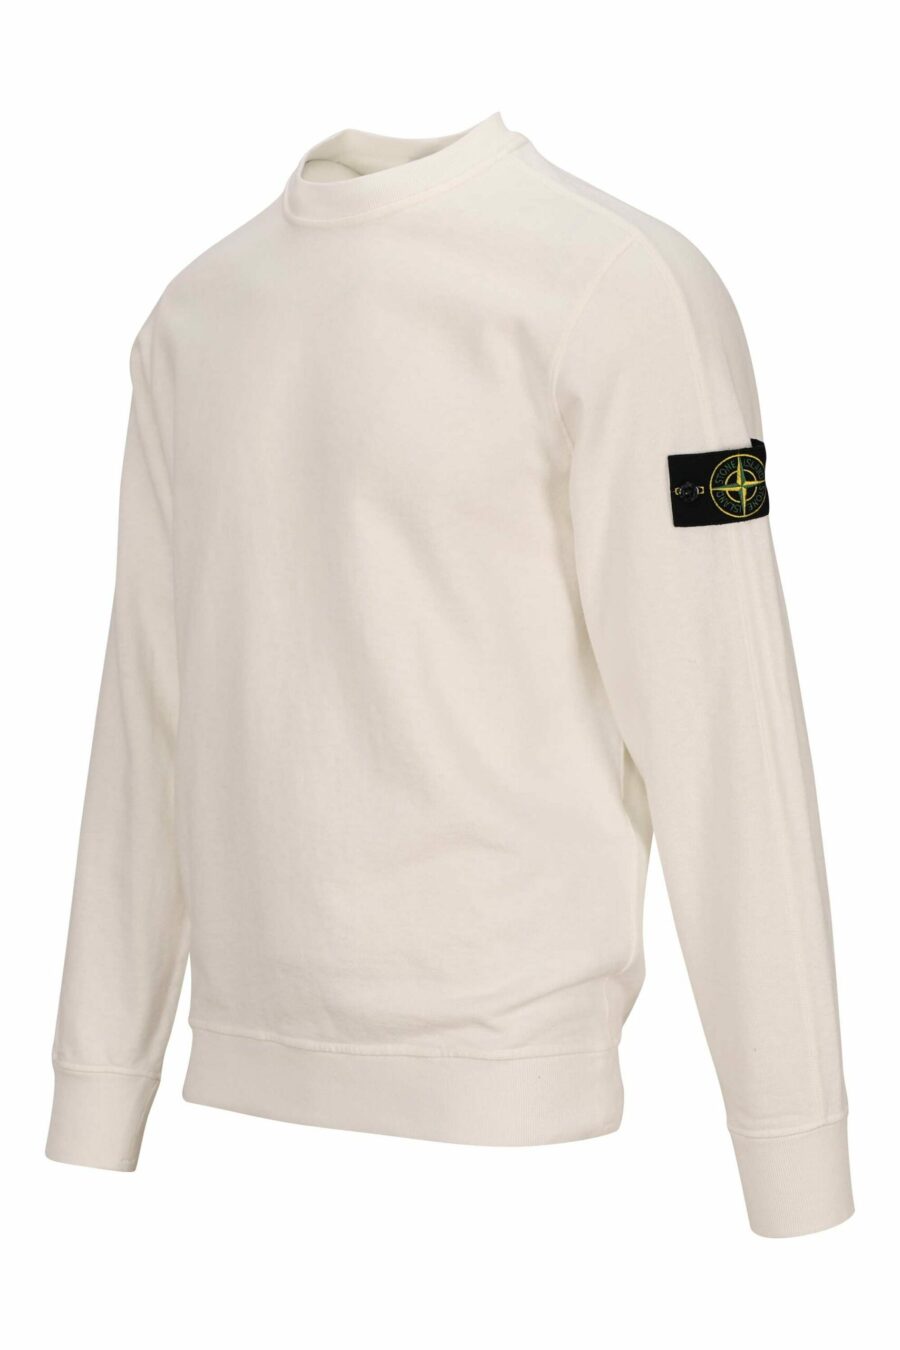 Sweatshirt branca com logótipo de bússola - 8052572901874 1 scaled